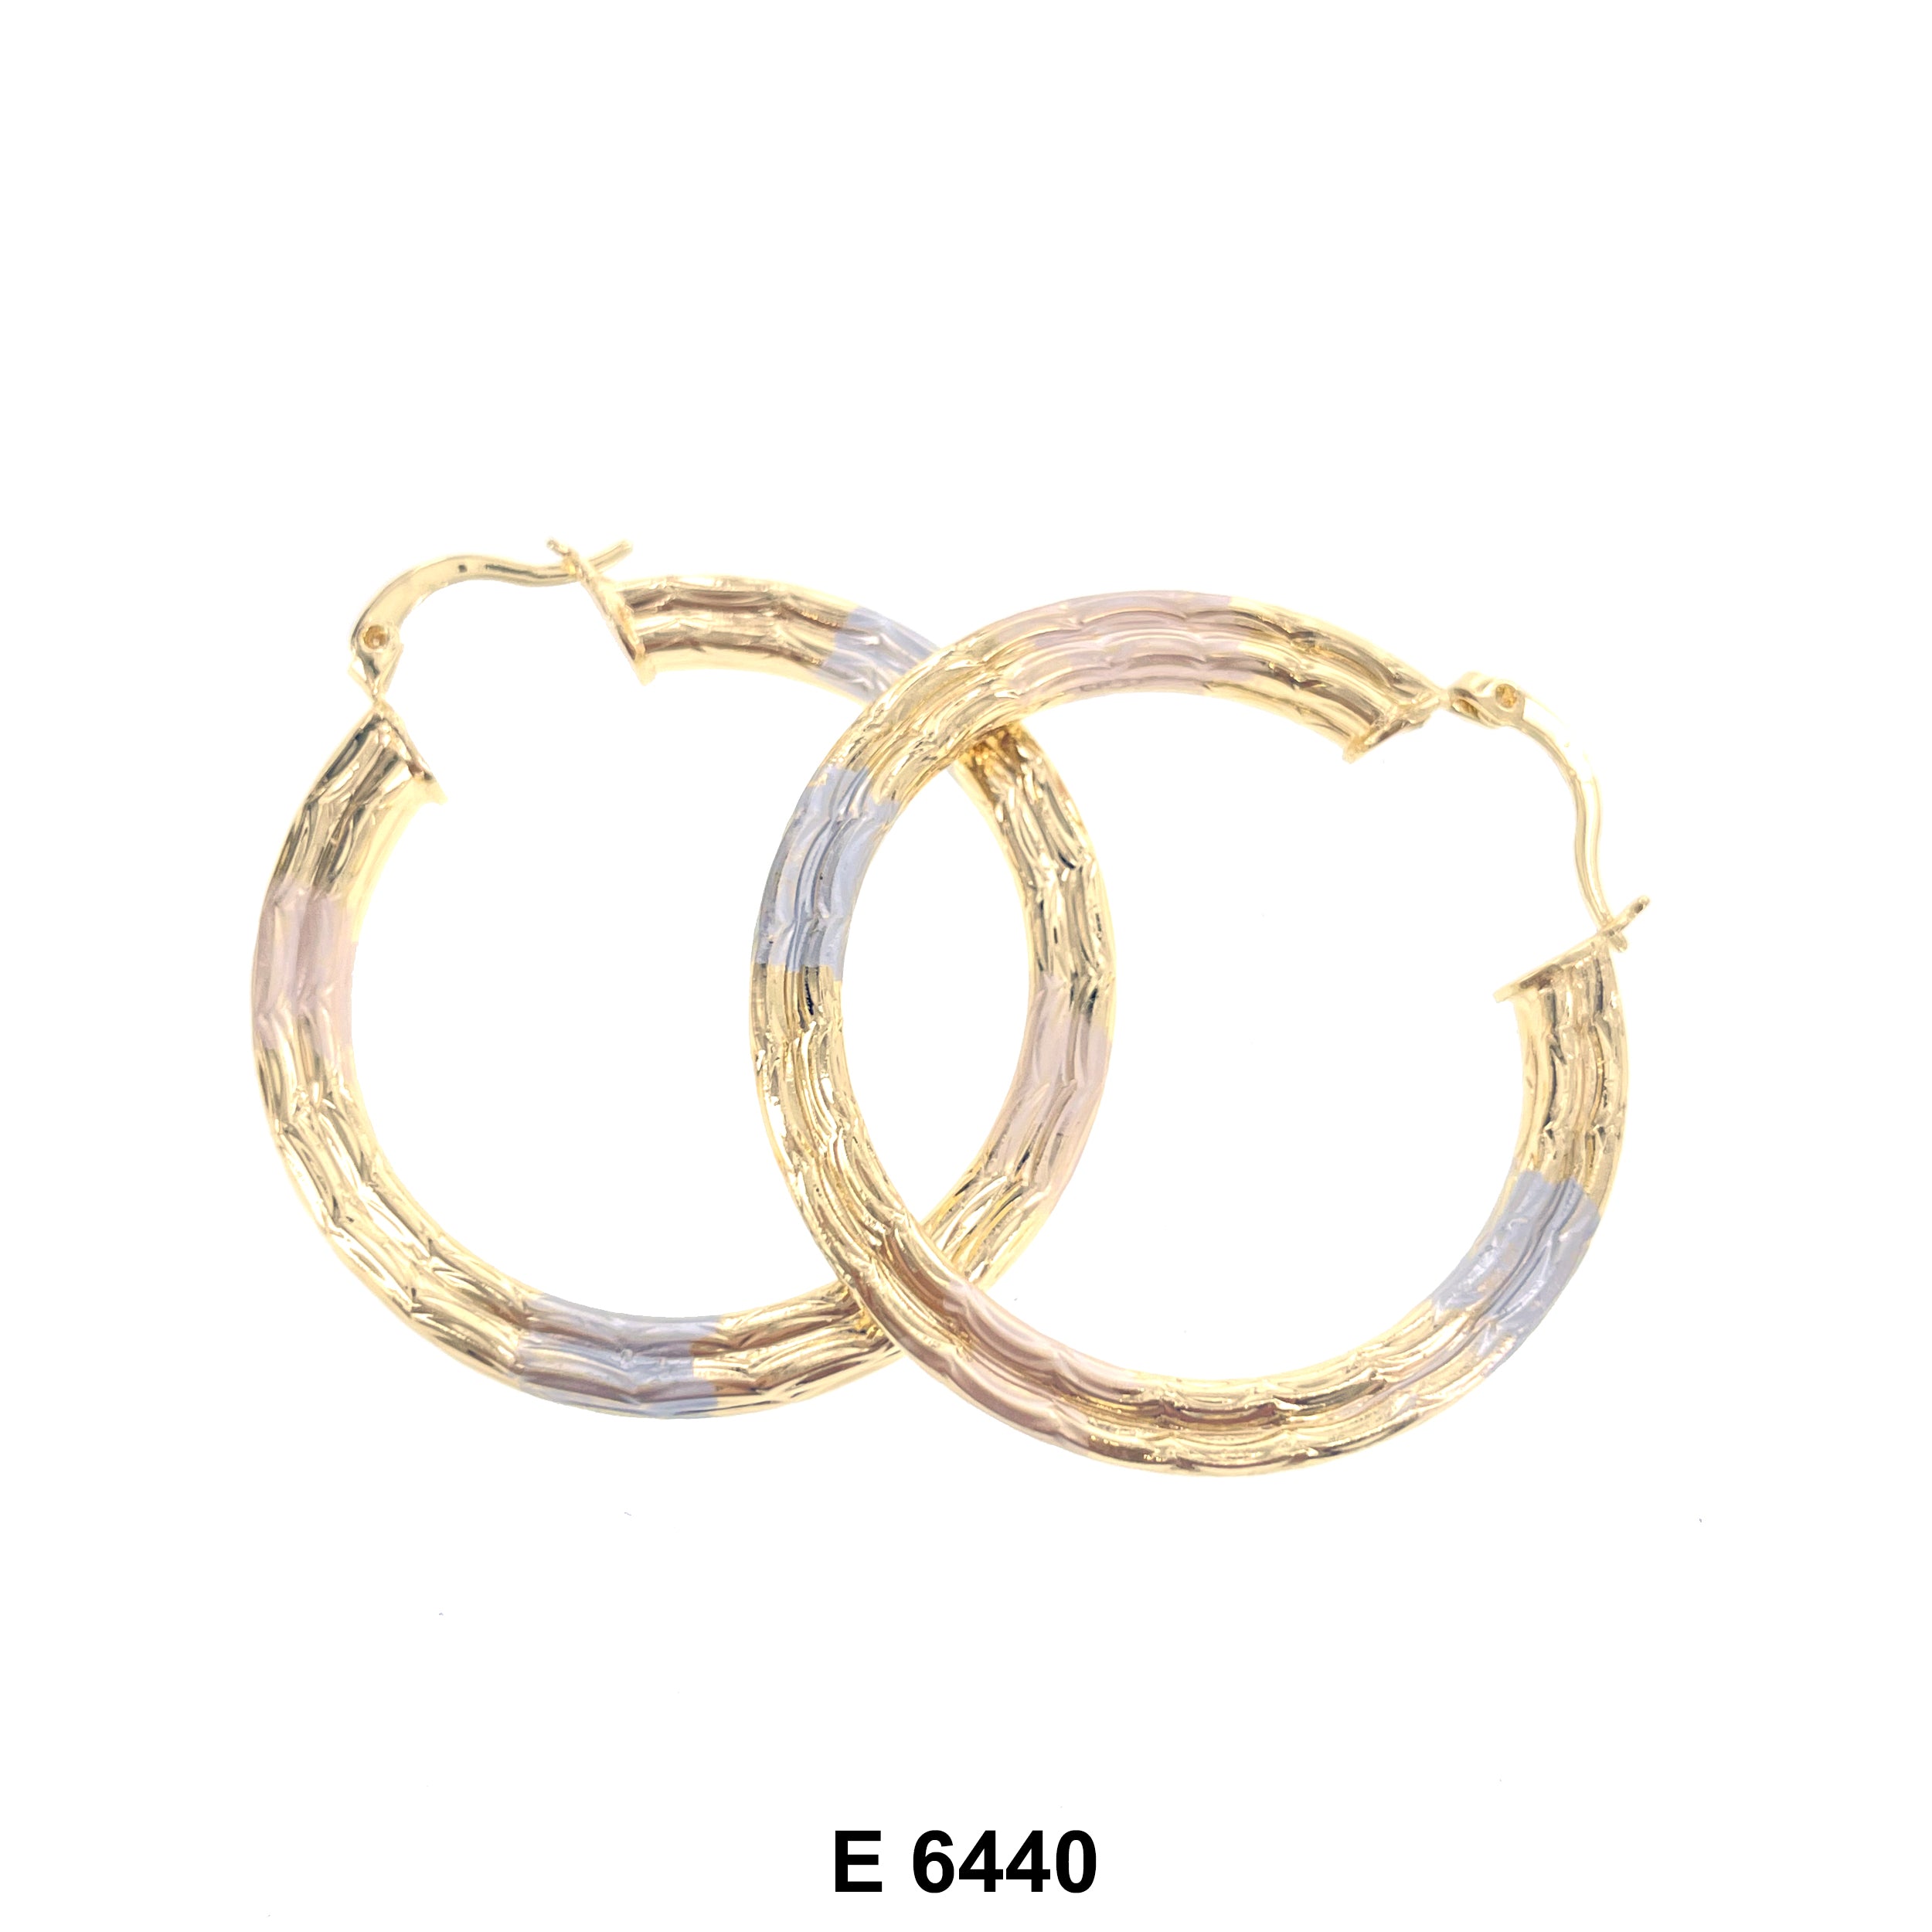 Engraved Hoop Earrings E 6440